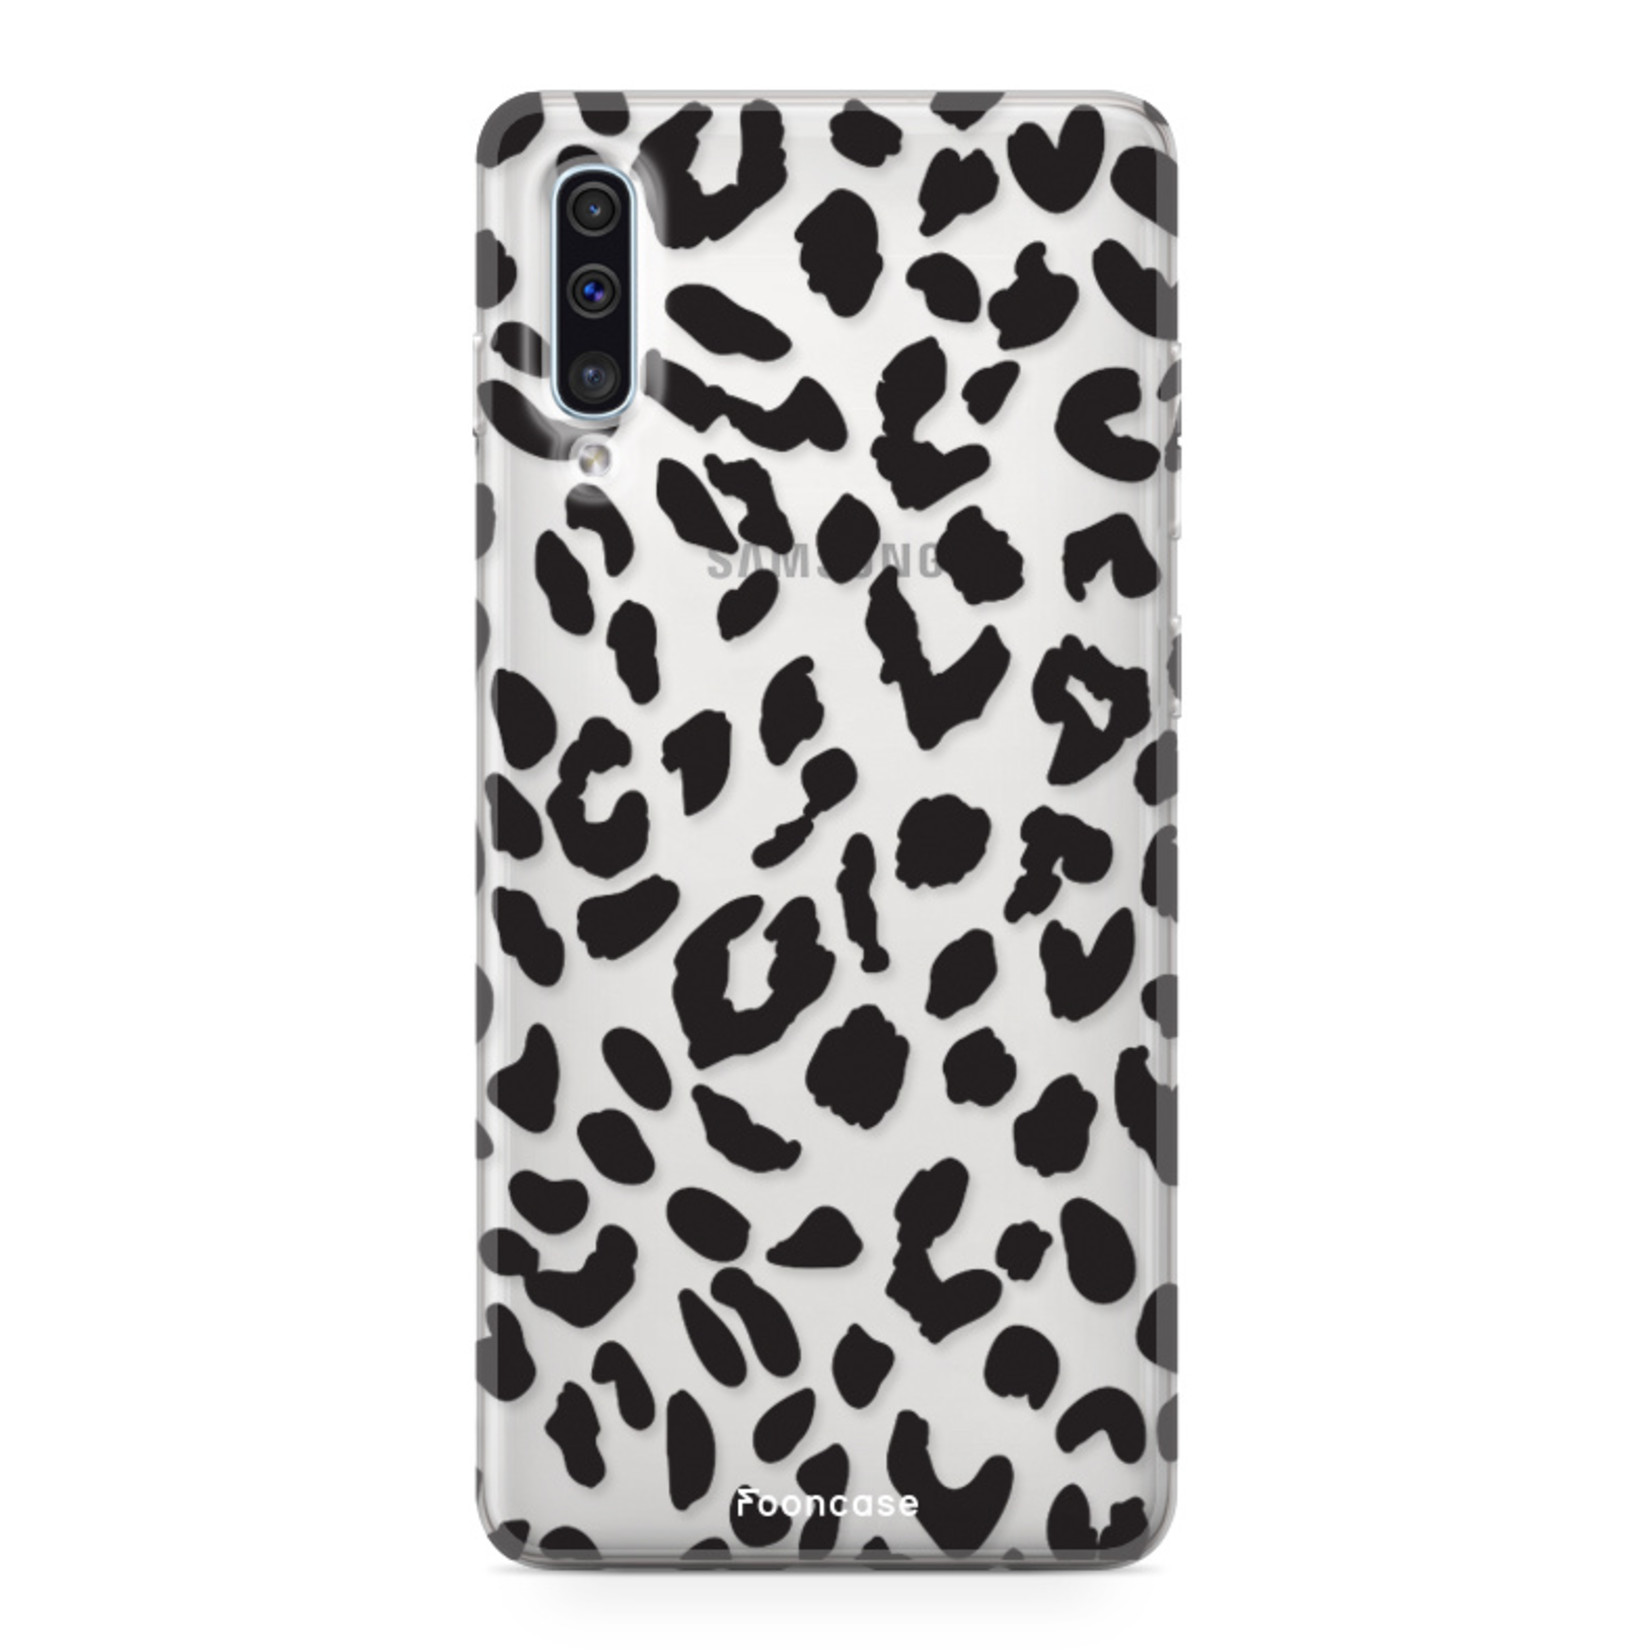 Samsung Galaxy A70 hoesje TPU Soft Case - Back Cover - Luipaard / Leopard print